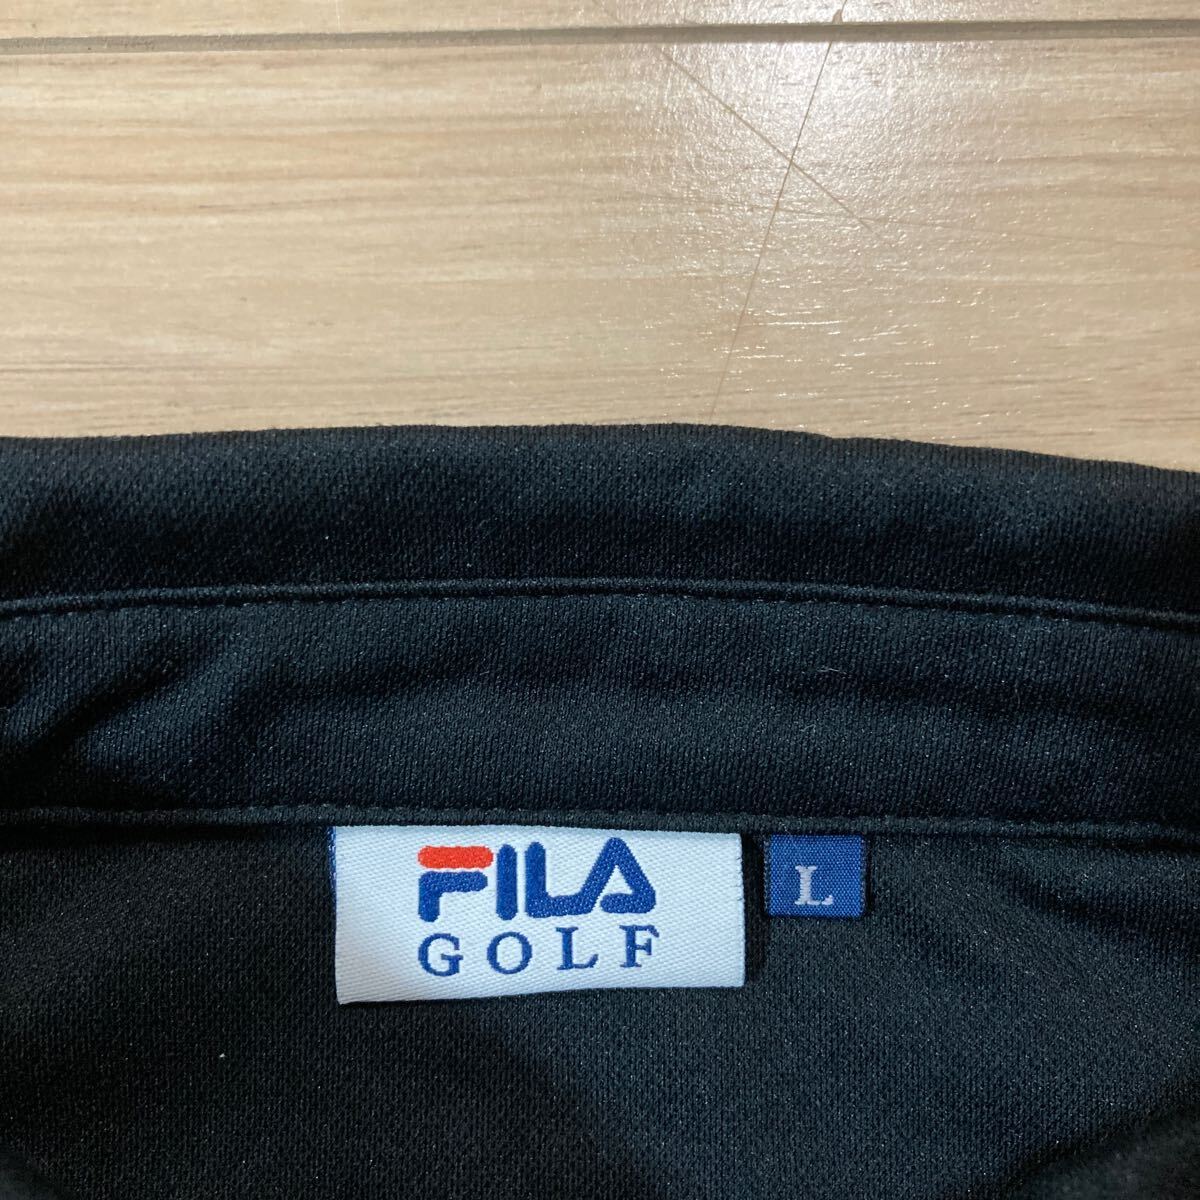 FILA GOLF フィラゴルフ ゴルフウェア ボタンダウンシャツ 半袖シャツ Lサイズ 黒 レディース 美品_画像3